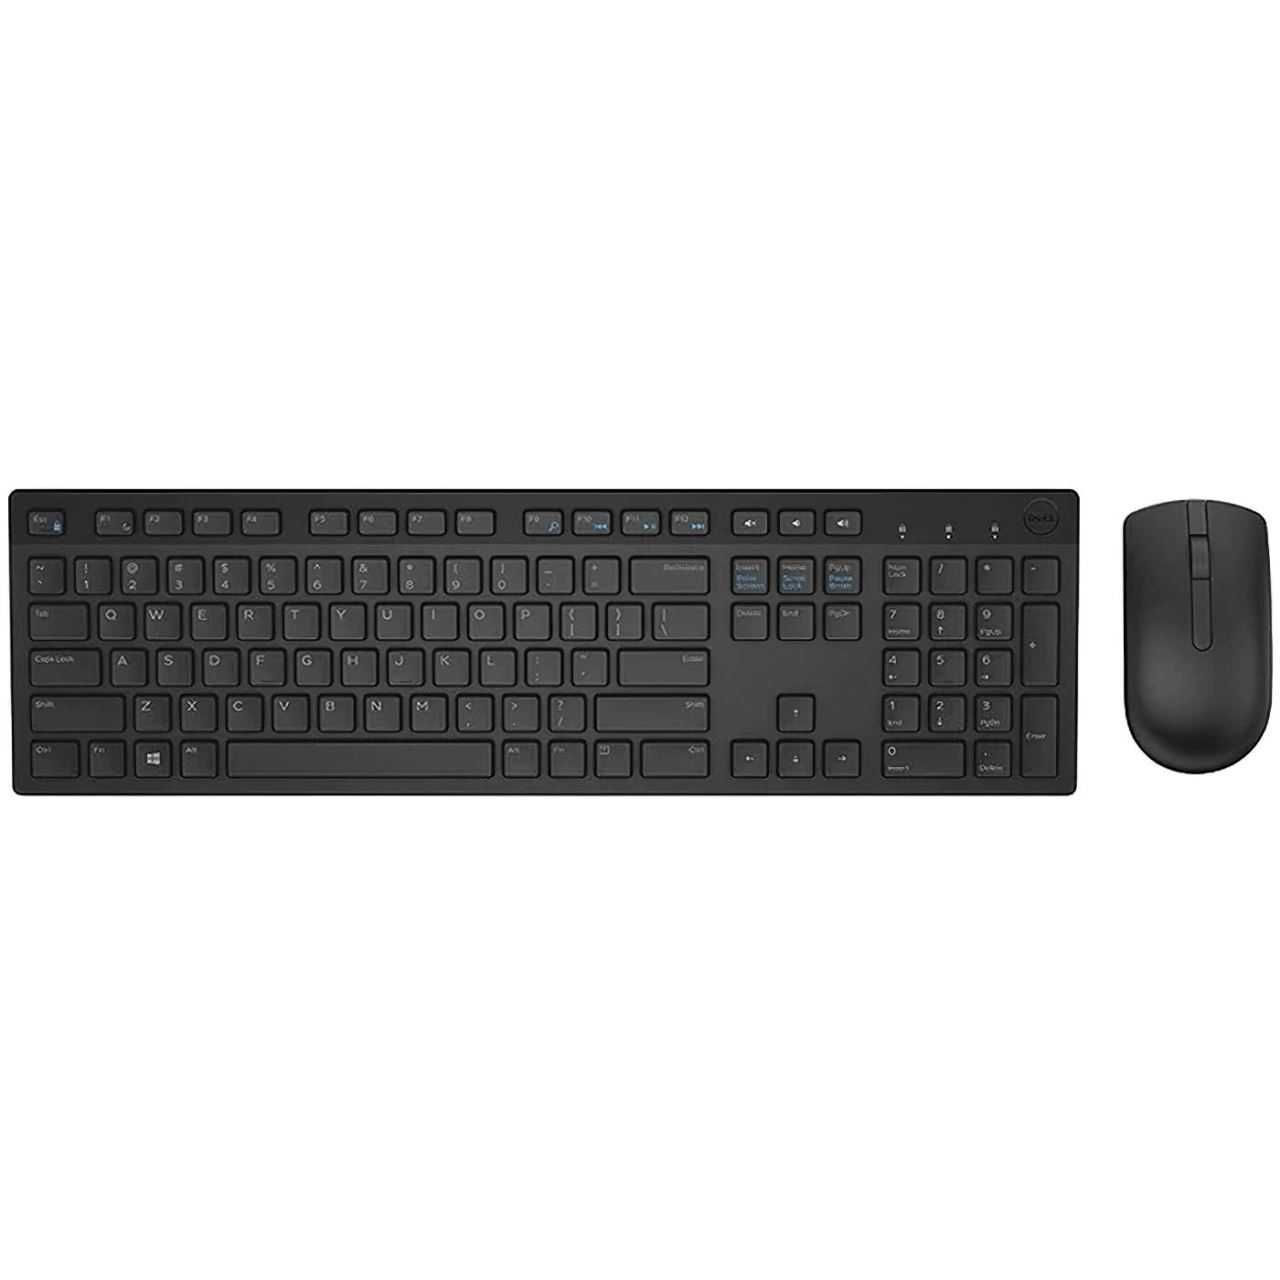 tastatura Dell km636 neagra engleza Noua nefolosita